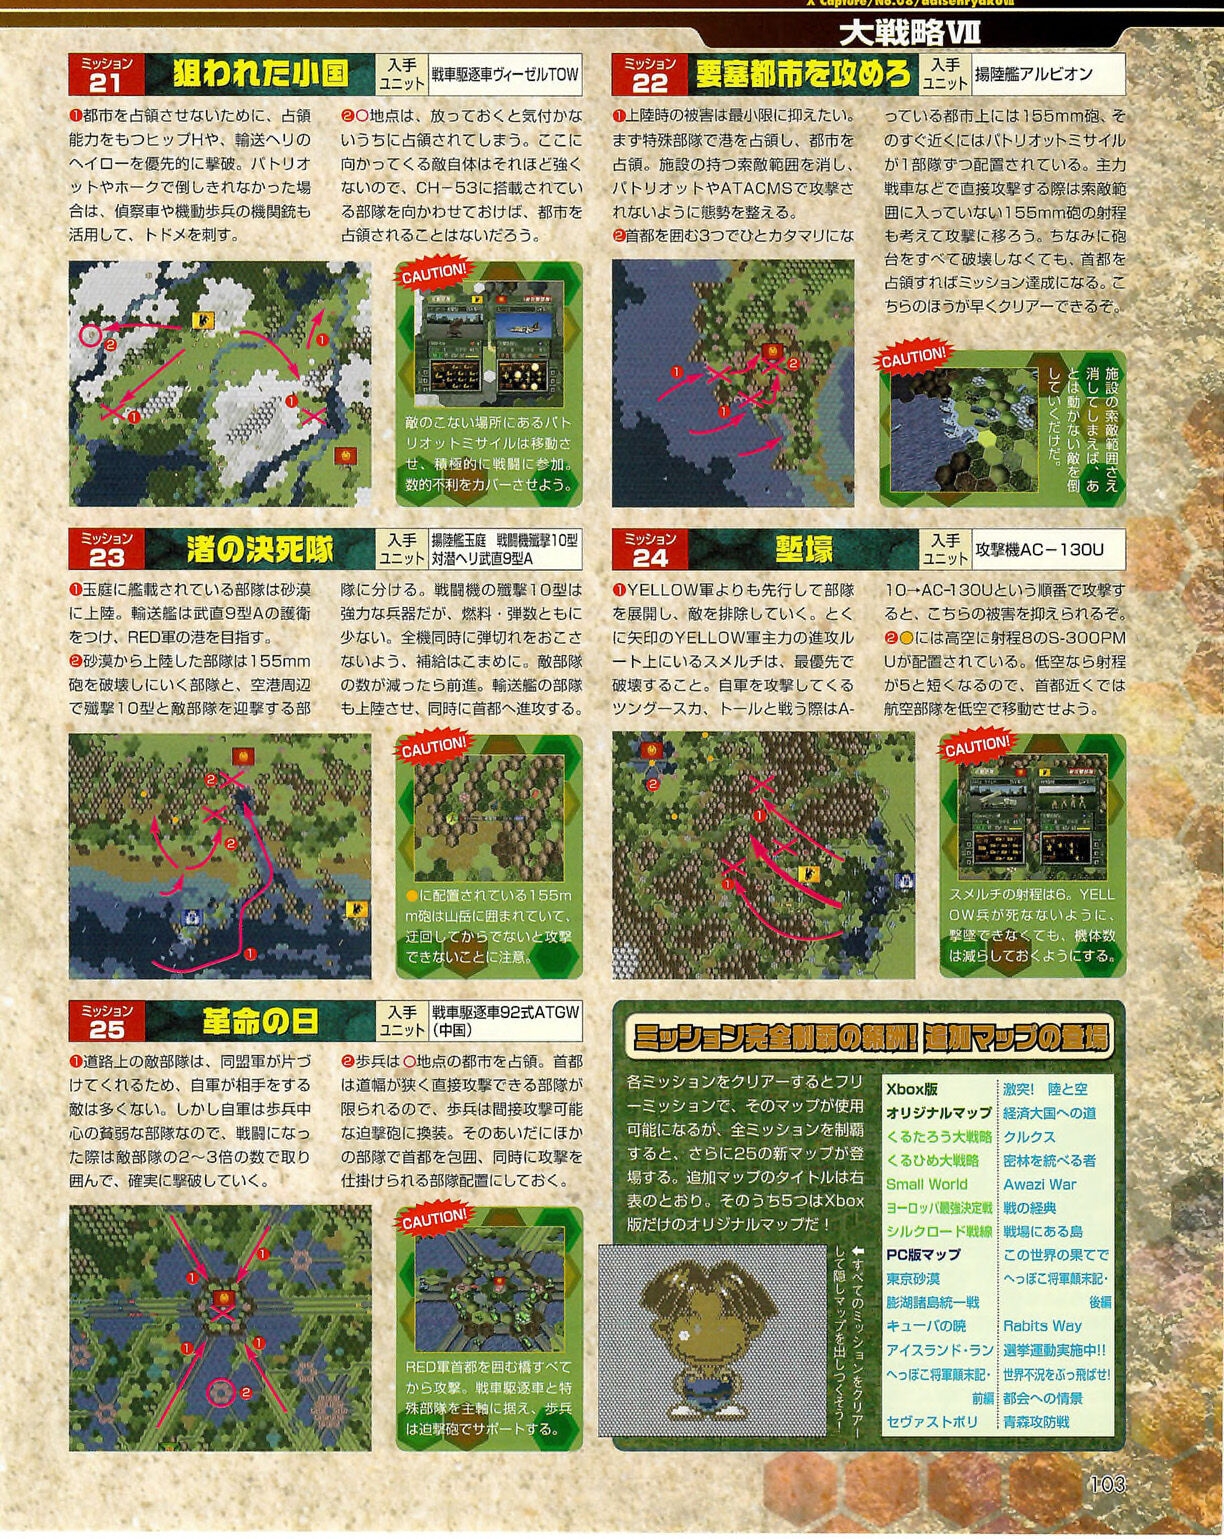 Famitsu Xbox 2003-09 102